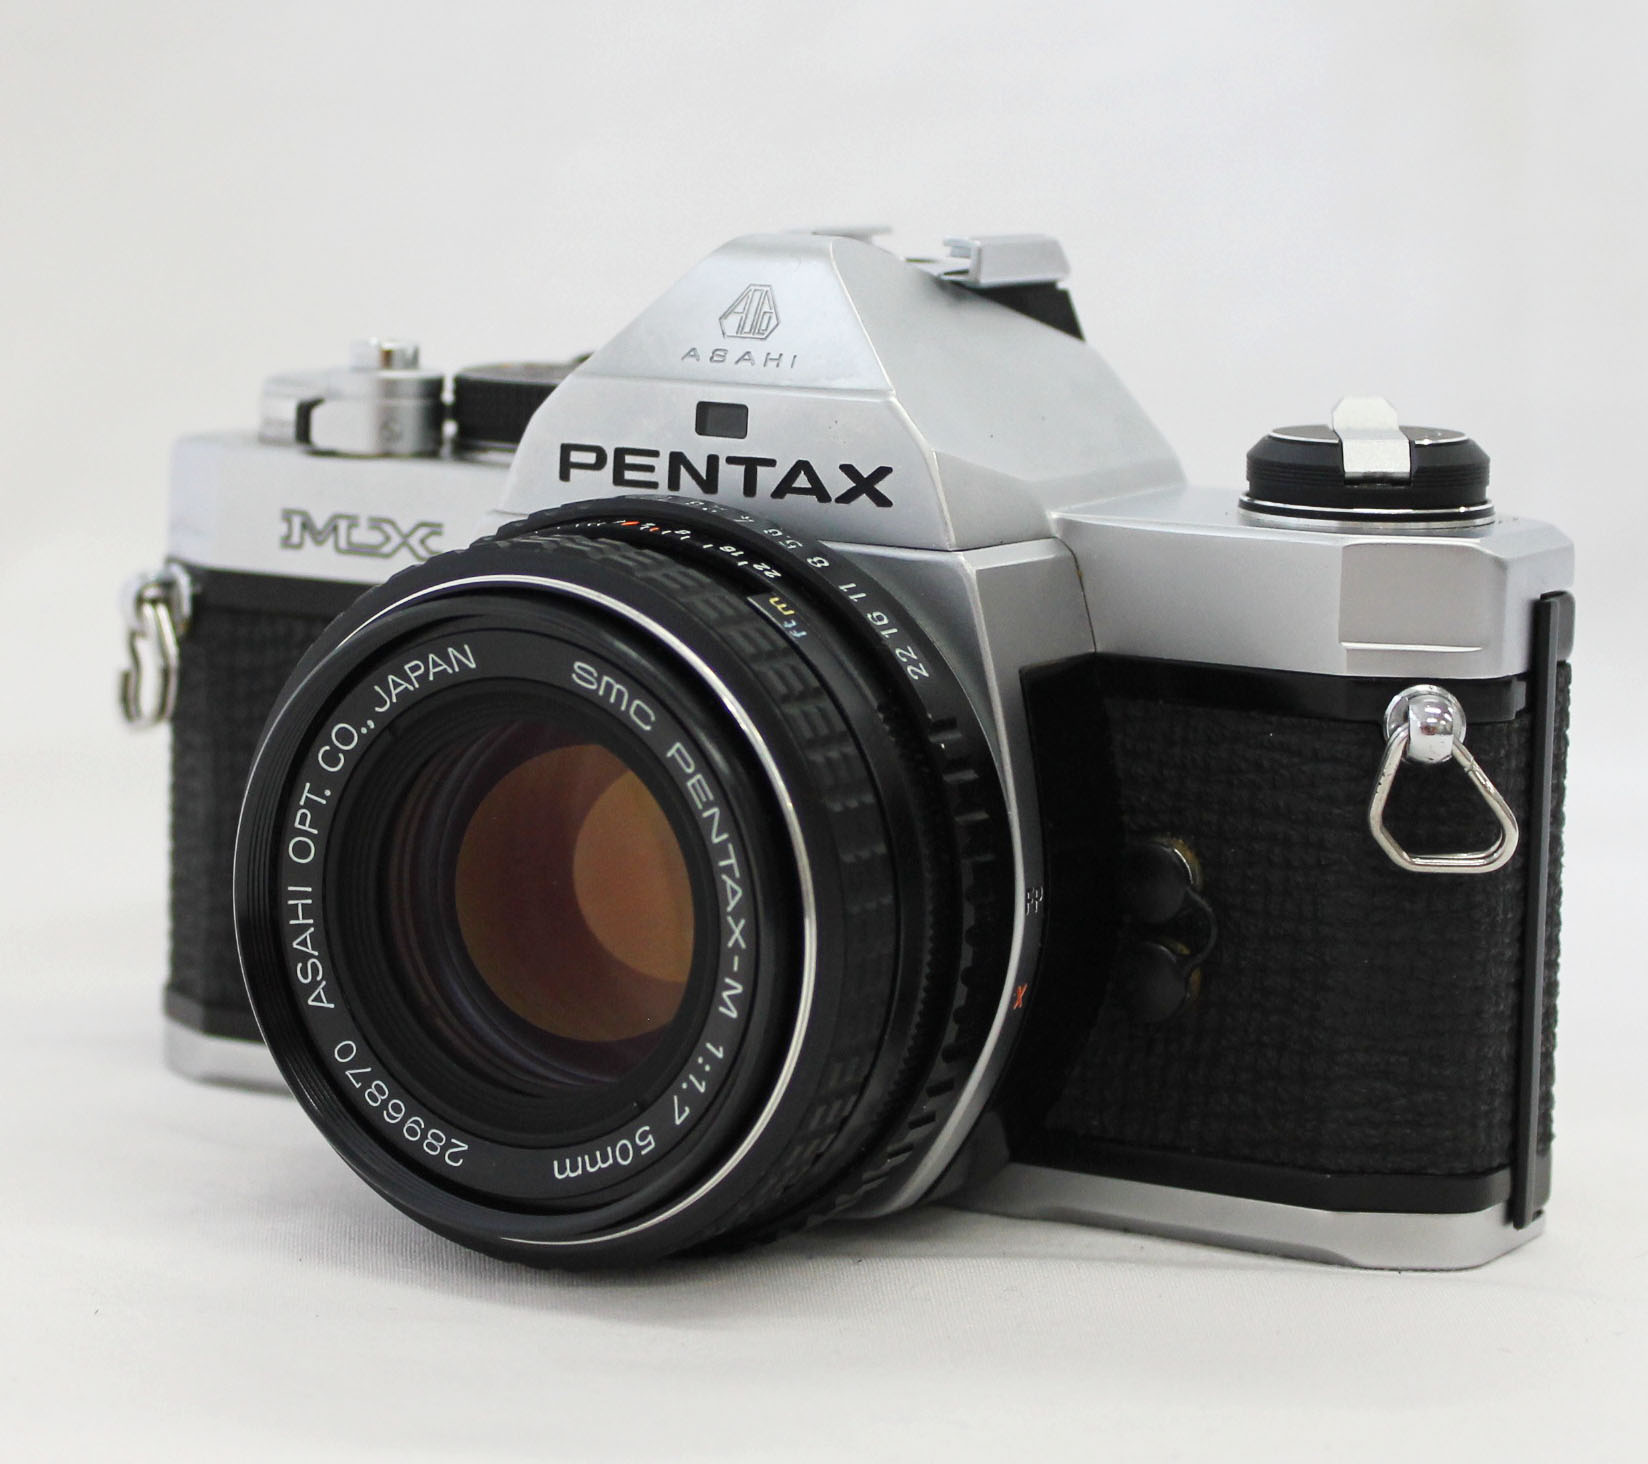 Japan Used Camera Shop | Pentax MX 35mm SLR Film Camera with SMC Pentax-M 50mm F/1.7 Lens from Japan